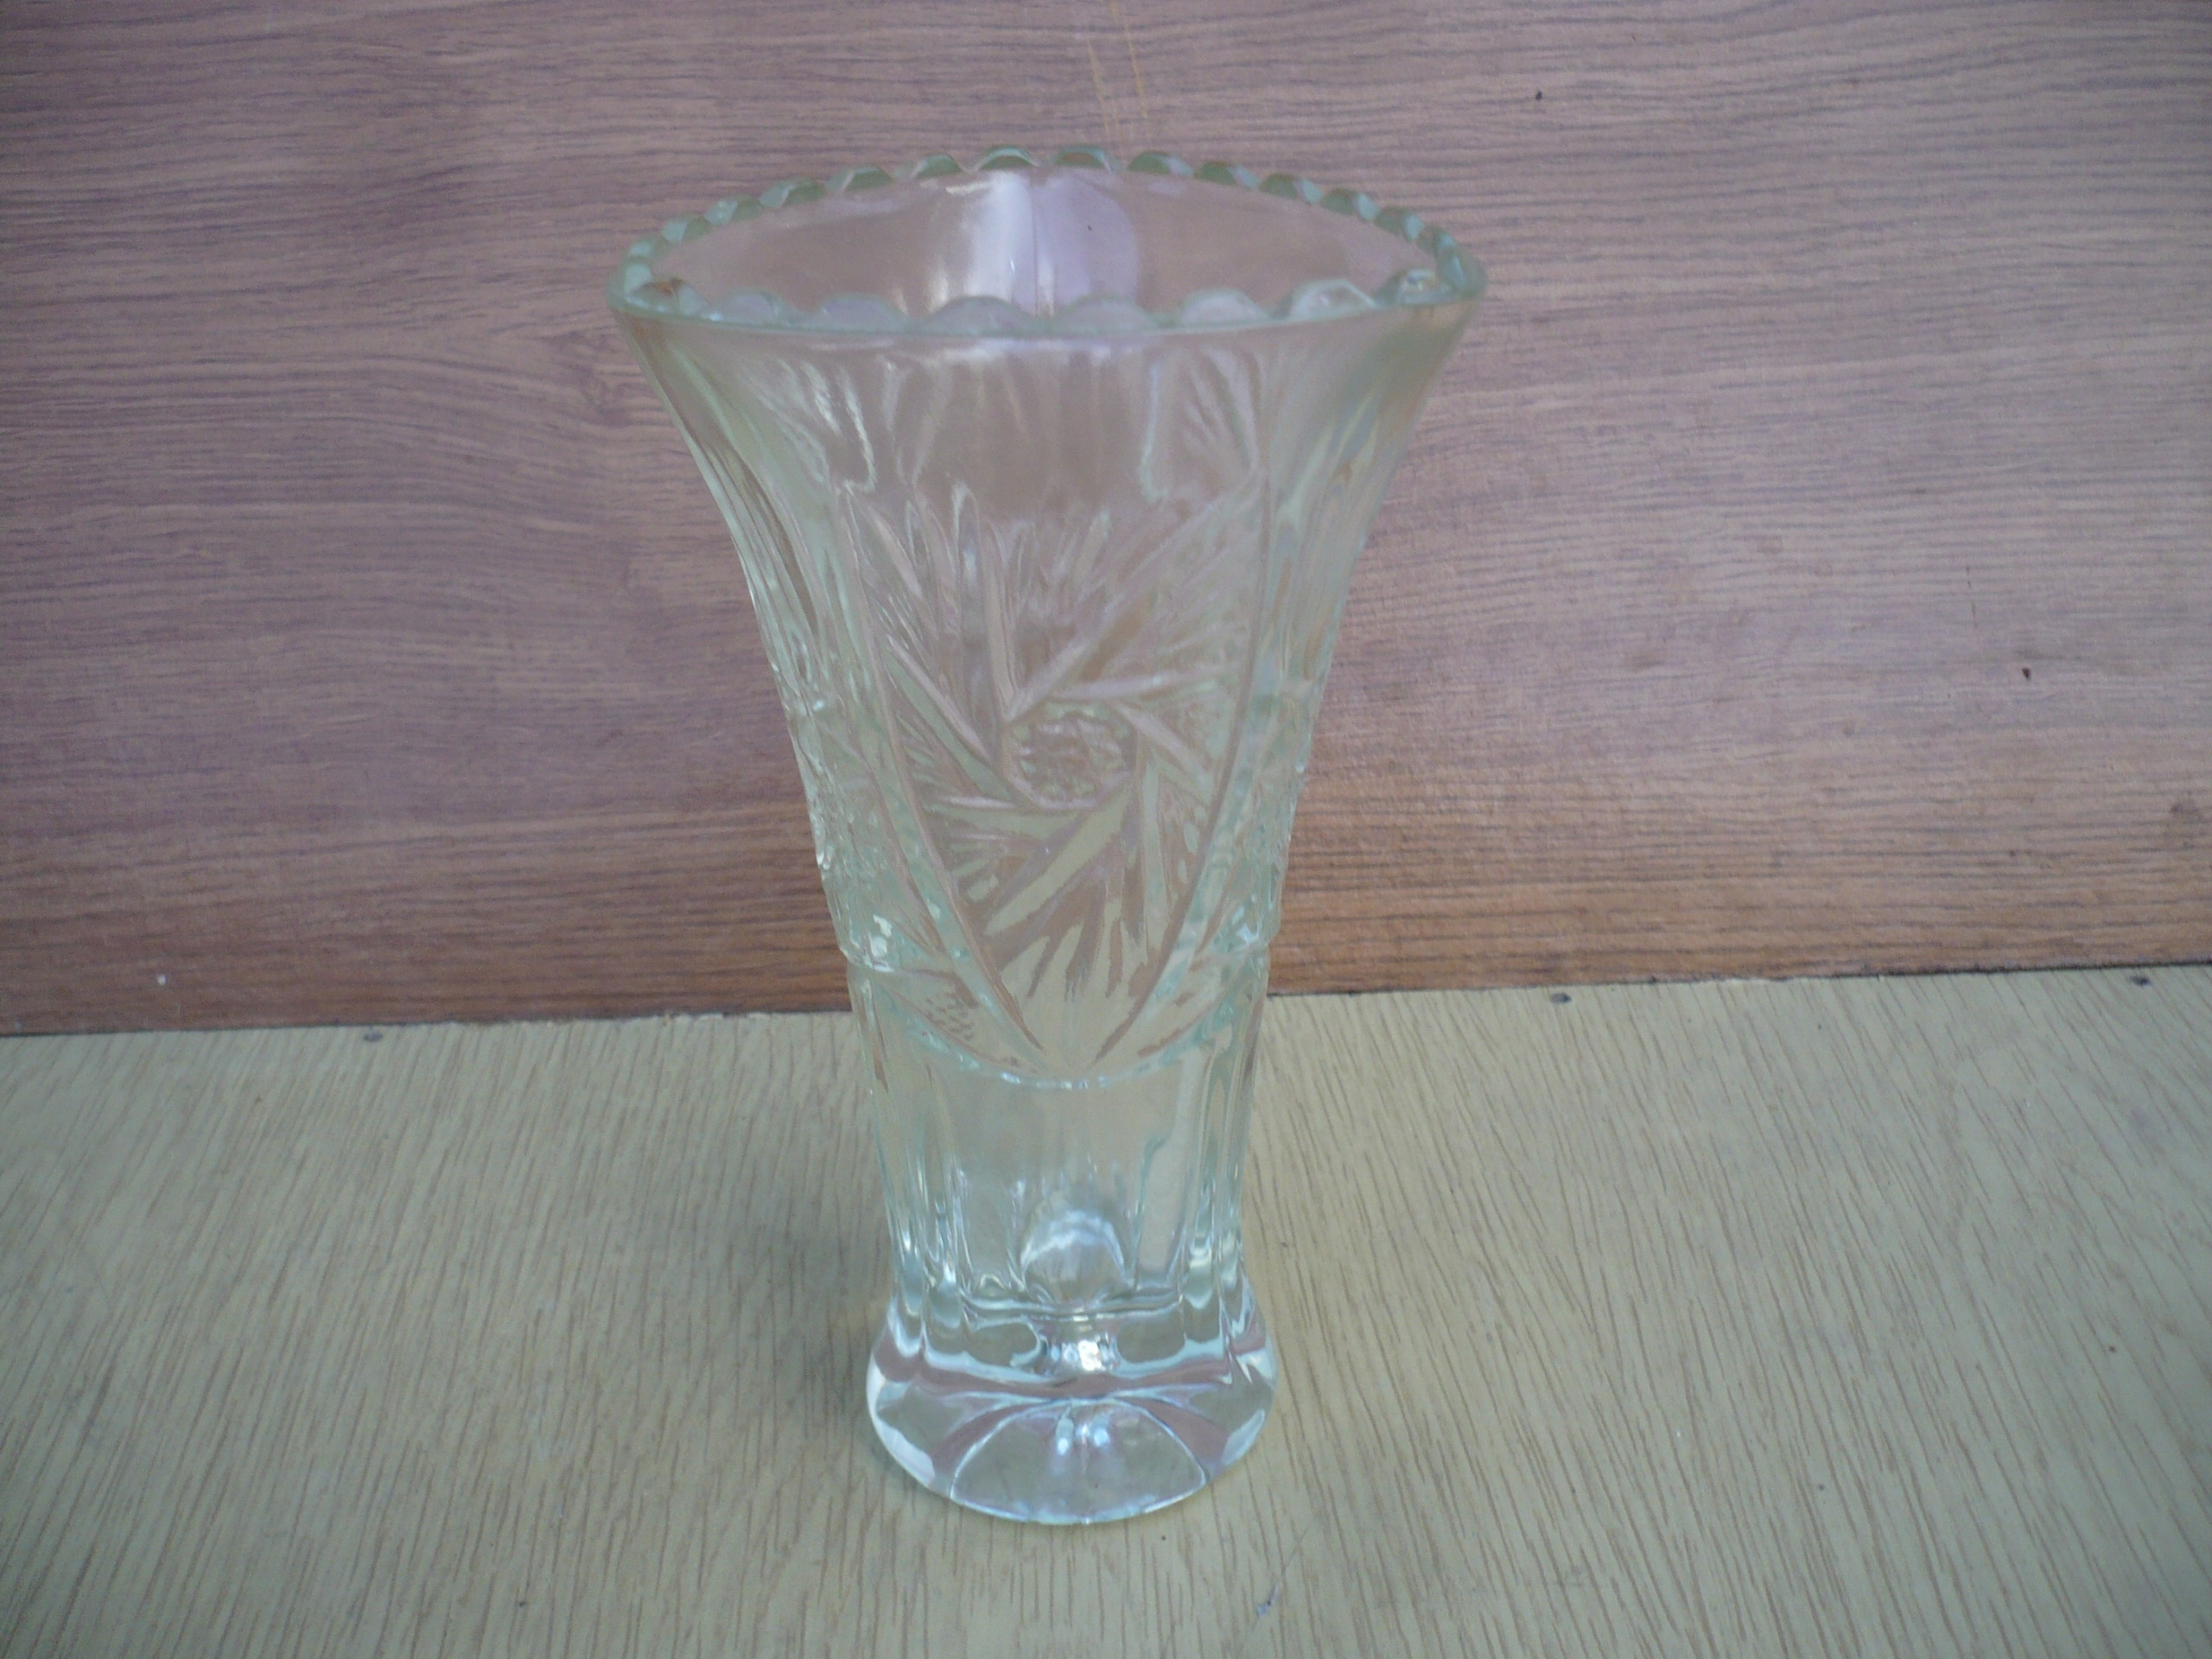 12 Wonderful Caithness Glass Vase 2024 free download caithness glass vase of wazon krysztaac281 7570972037 allegro pl wiac299cej niac2bc aukcje within 92bb1ddd400883424bf4bf0887be